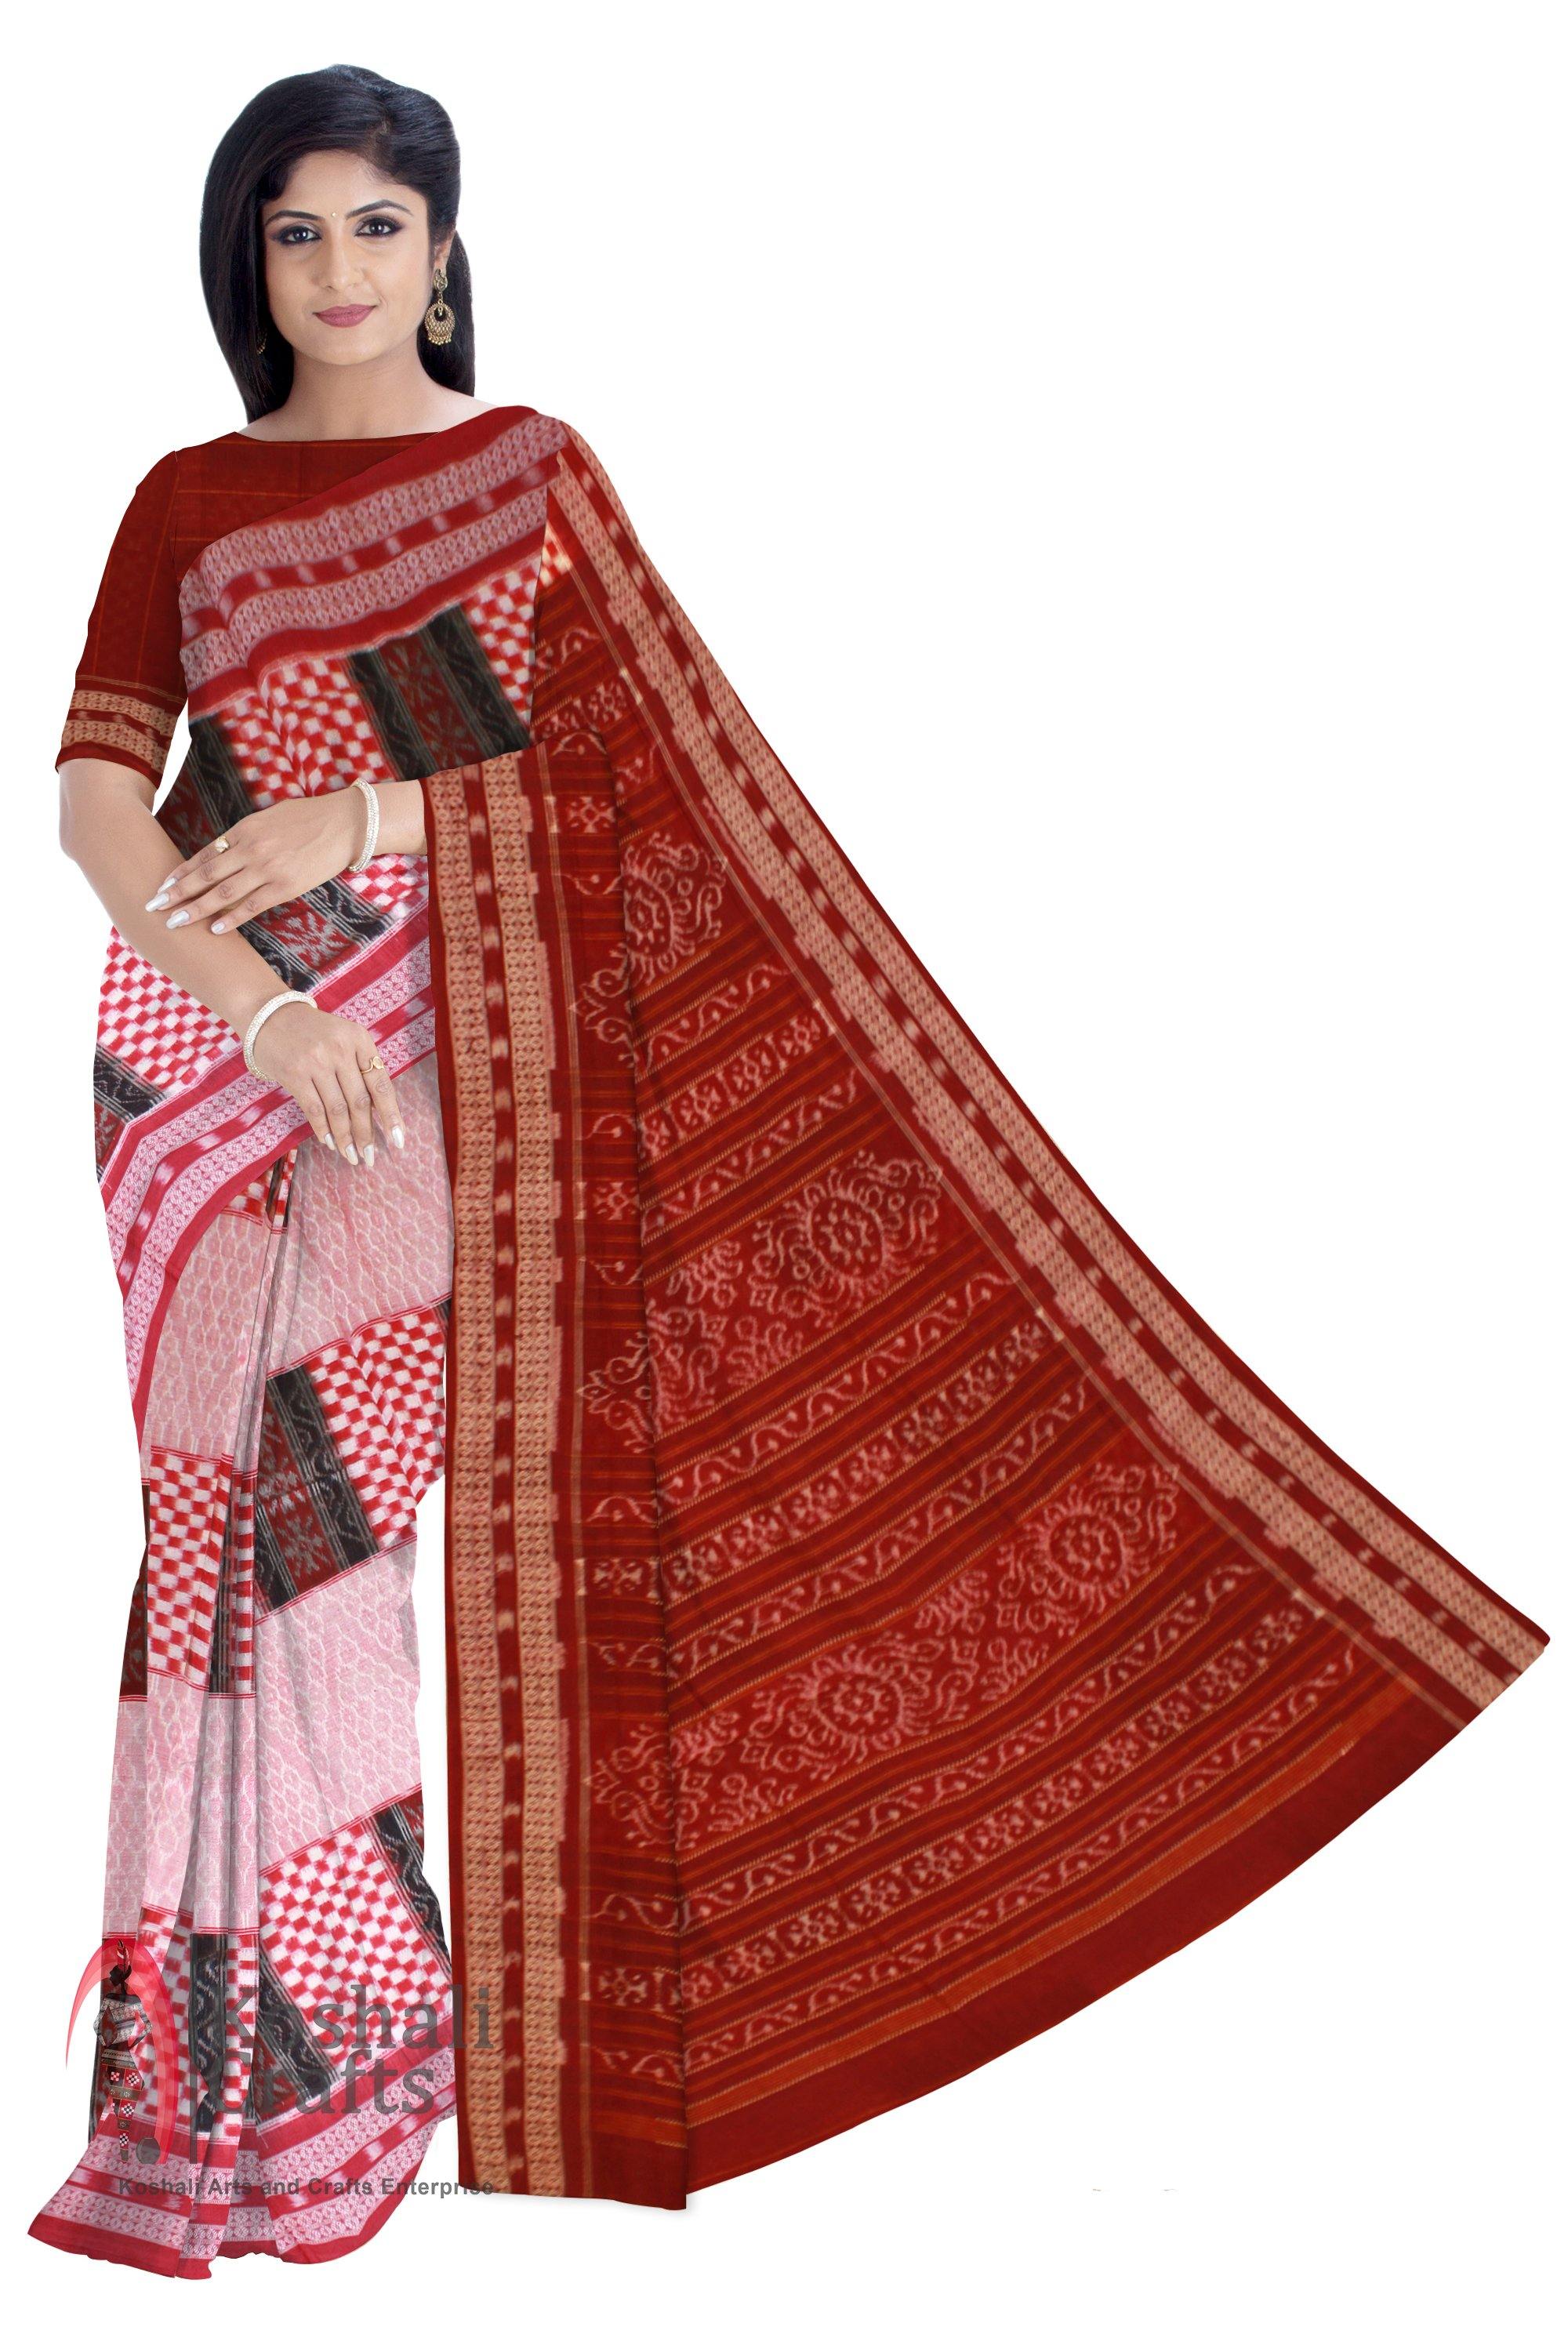 Red & baby pink Cotton Saree - Koshali Arts & Crafts Enterprise